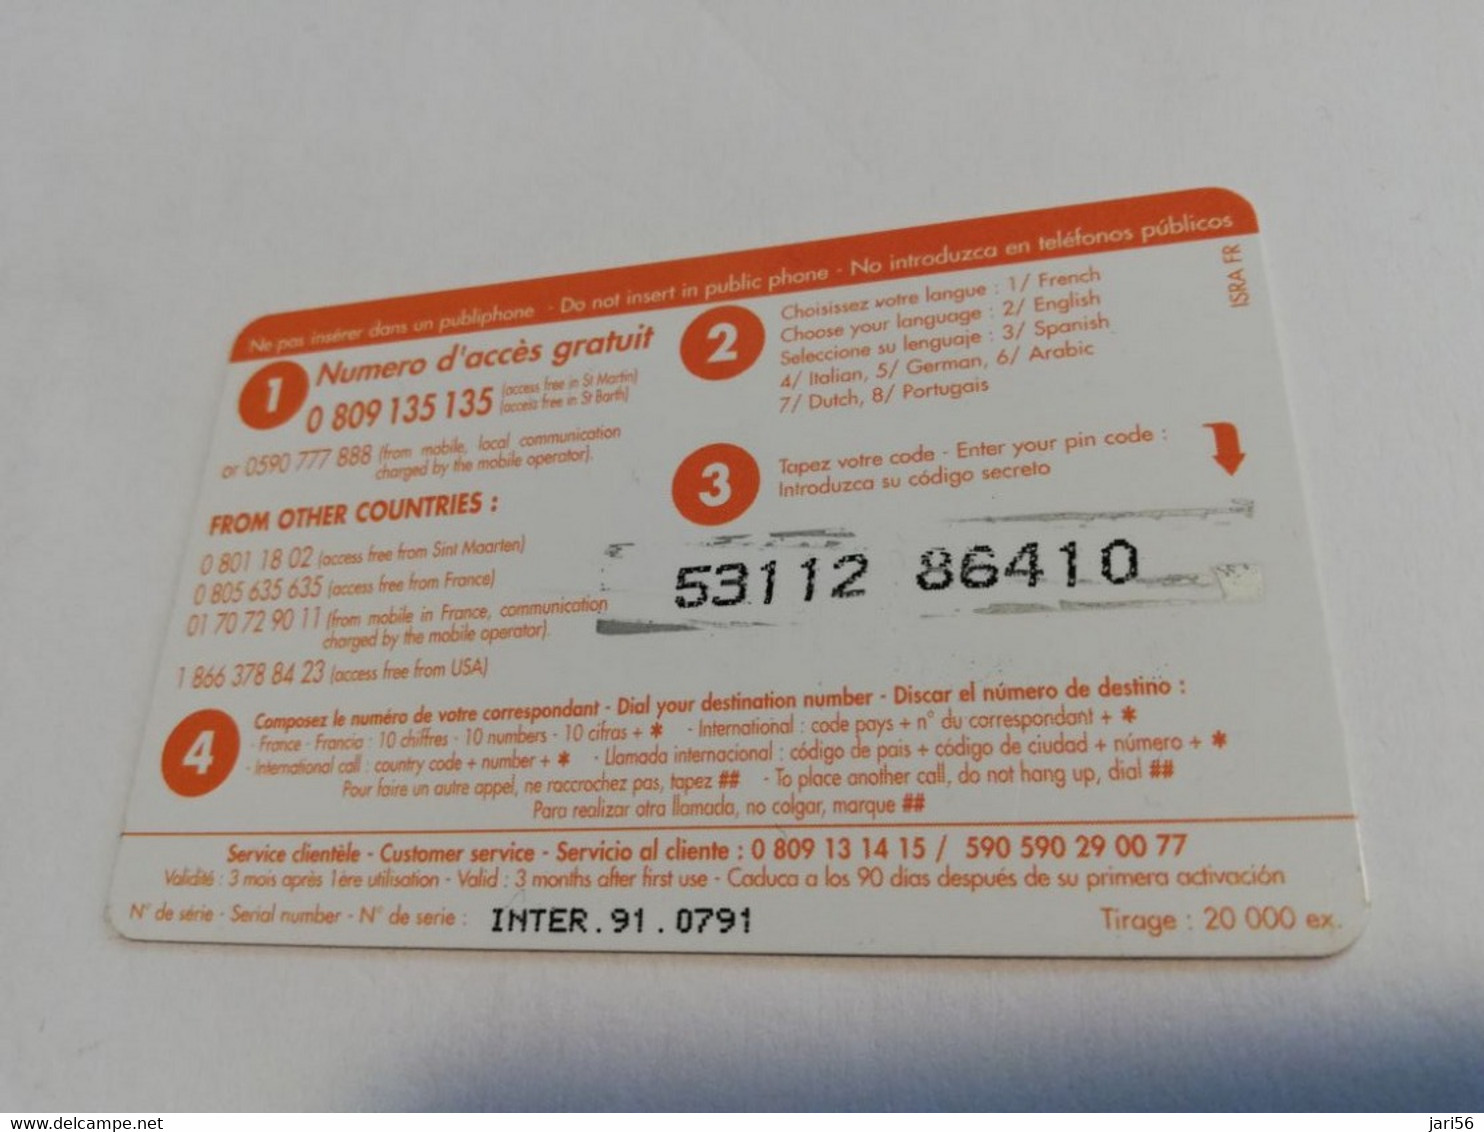 ST MARTIN / INTERCARD  3 EURO  OCTROI DE COLE BAY           NO 091   Fine Used Card    ** 6577 ** - Antilles (French)